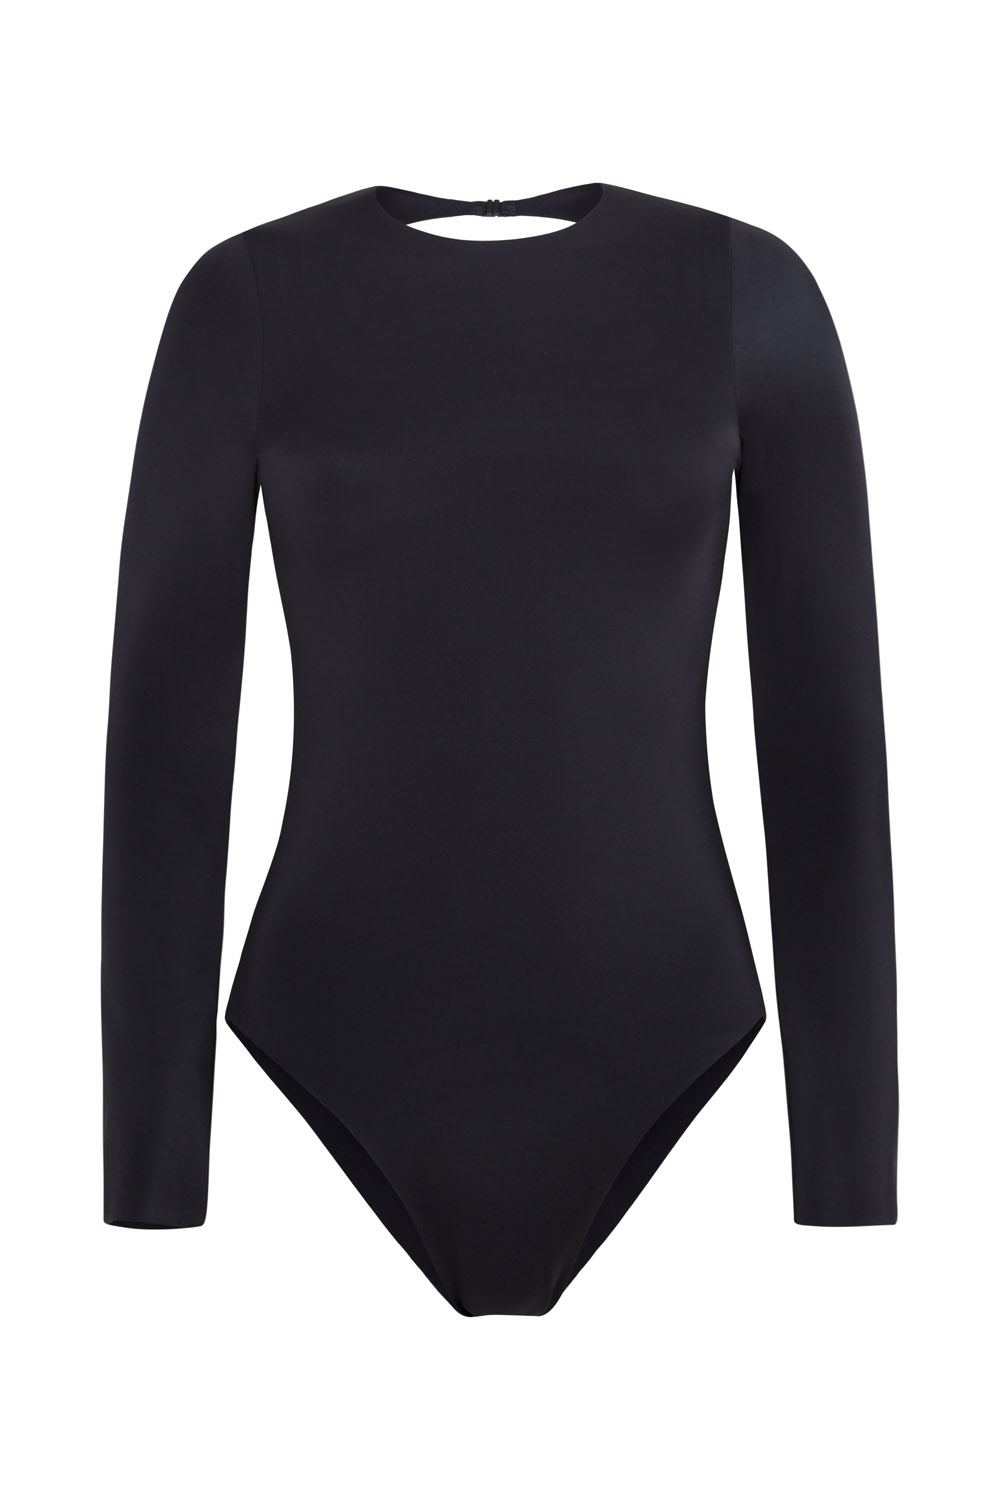 Sustainable Luxury Swimwear / Ropa de baño sostenible, eco bodysuit / bodysuit ecológico. Eugenie in black, by NOW_THEN